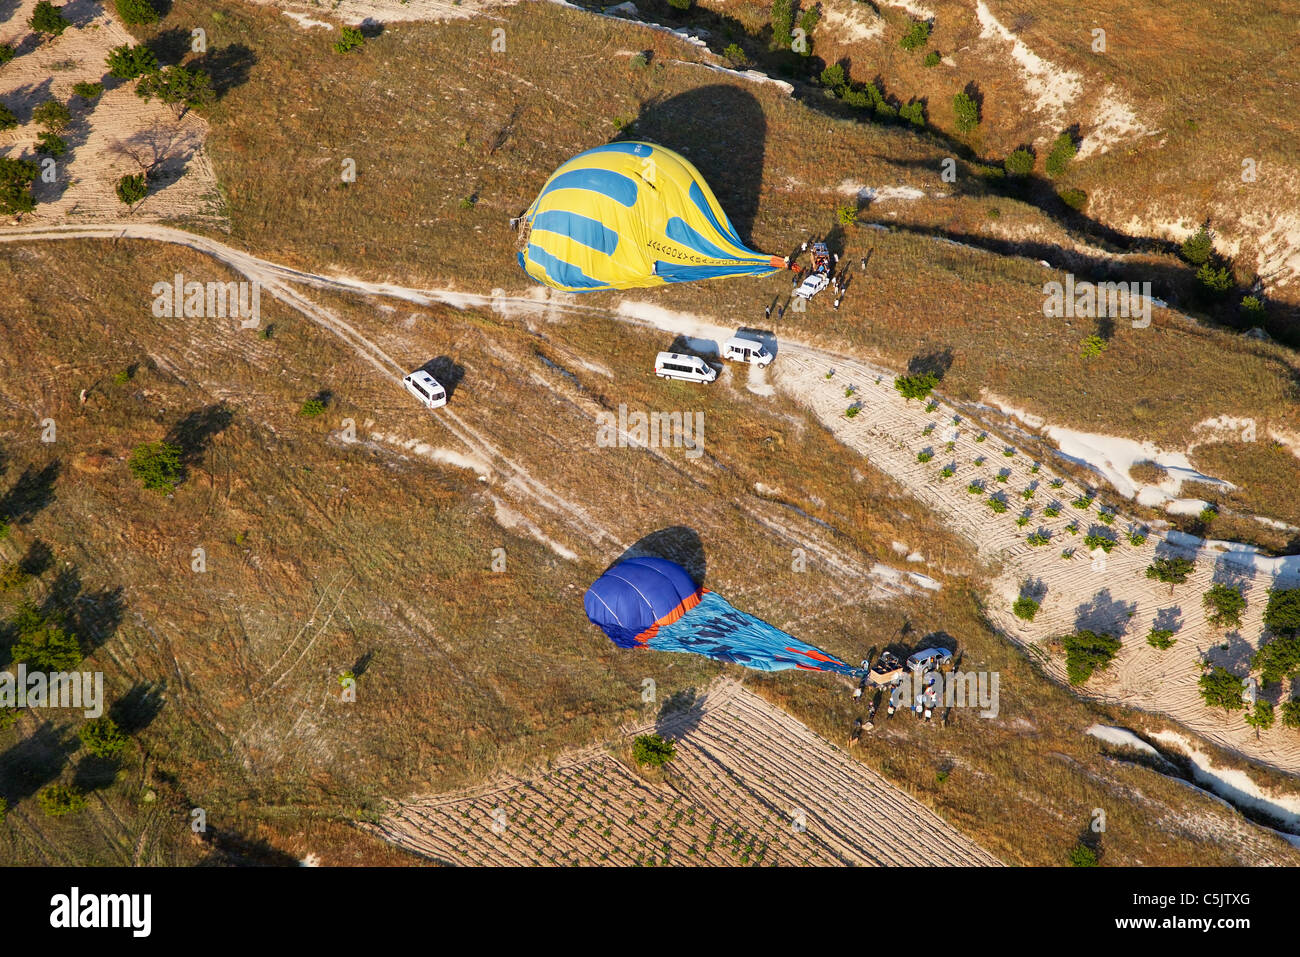 Juni 2011 Luftballons Luftbild gelandet heißer Luft werden weggepackt, Kappadokien, Türkei, Horizontal, Textfreiraum Stockfoto